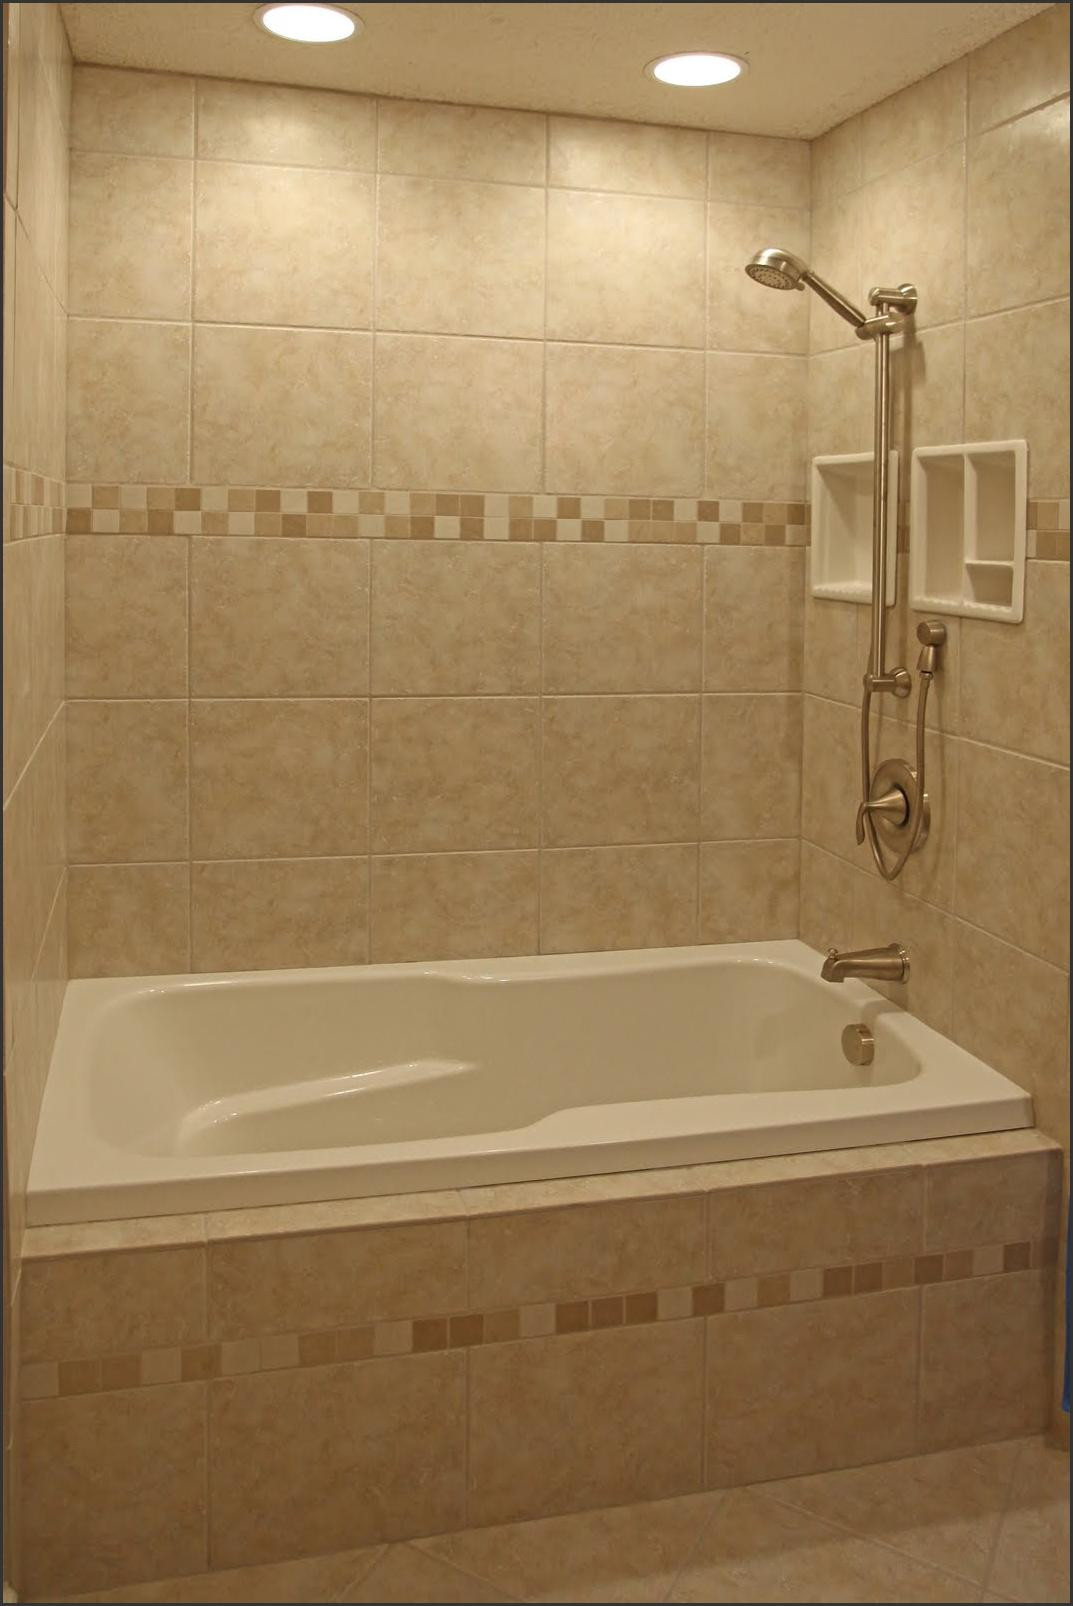 Bathroom Tiles Design Images
 24 amazing antique bathroom floor tile pictures and ideas 2019